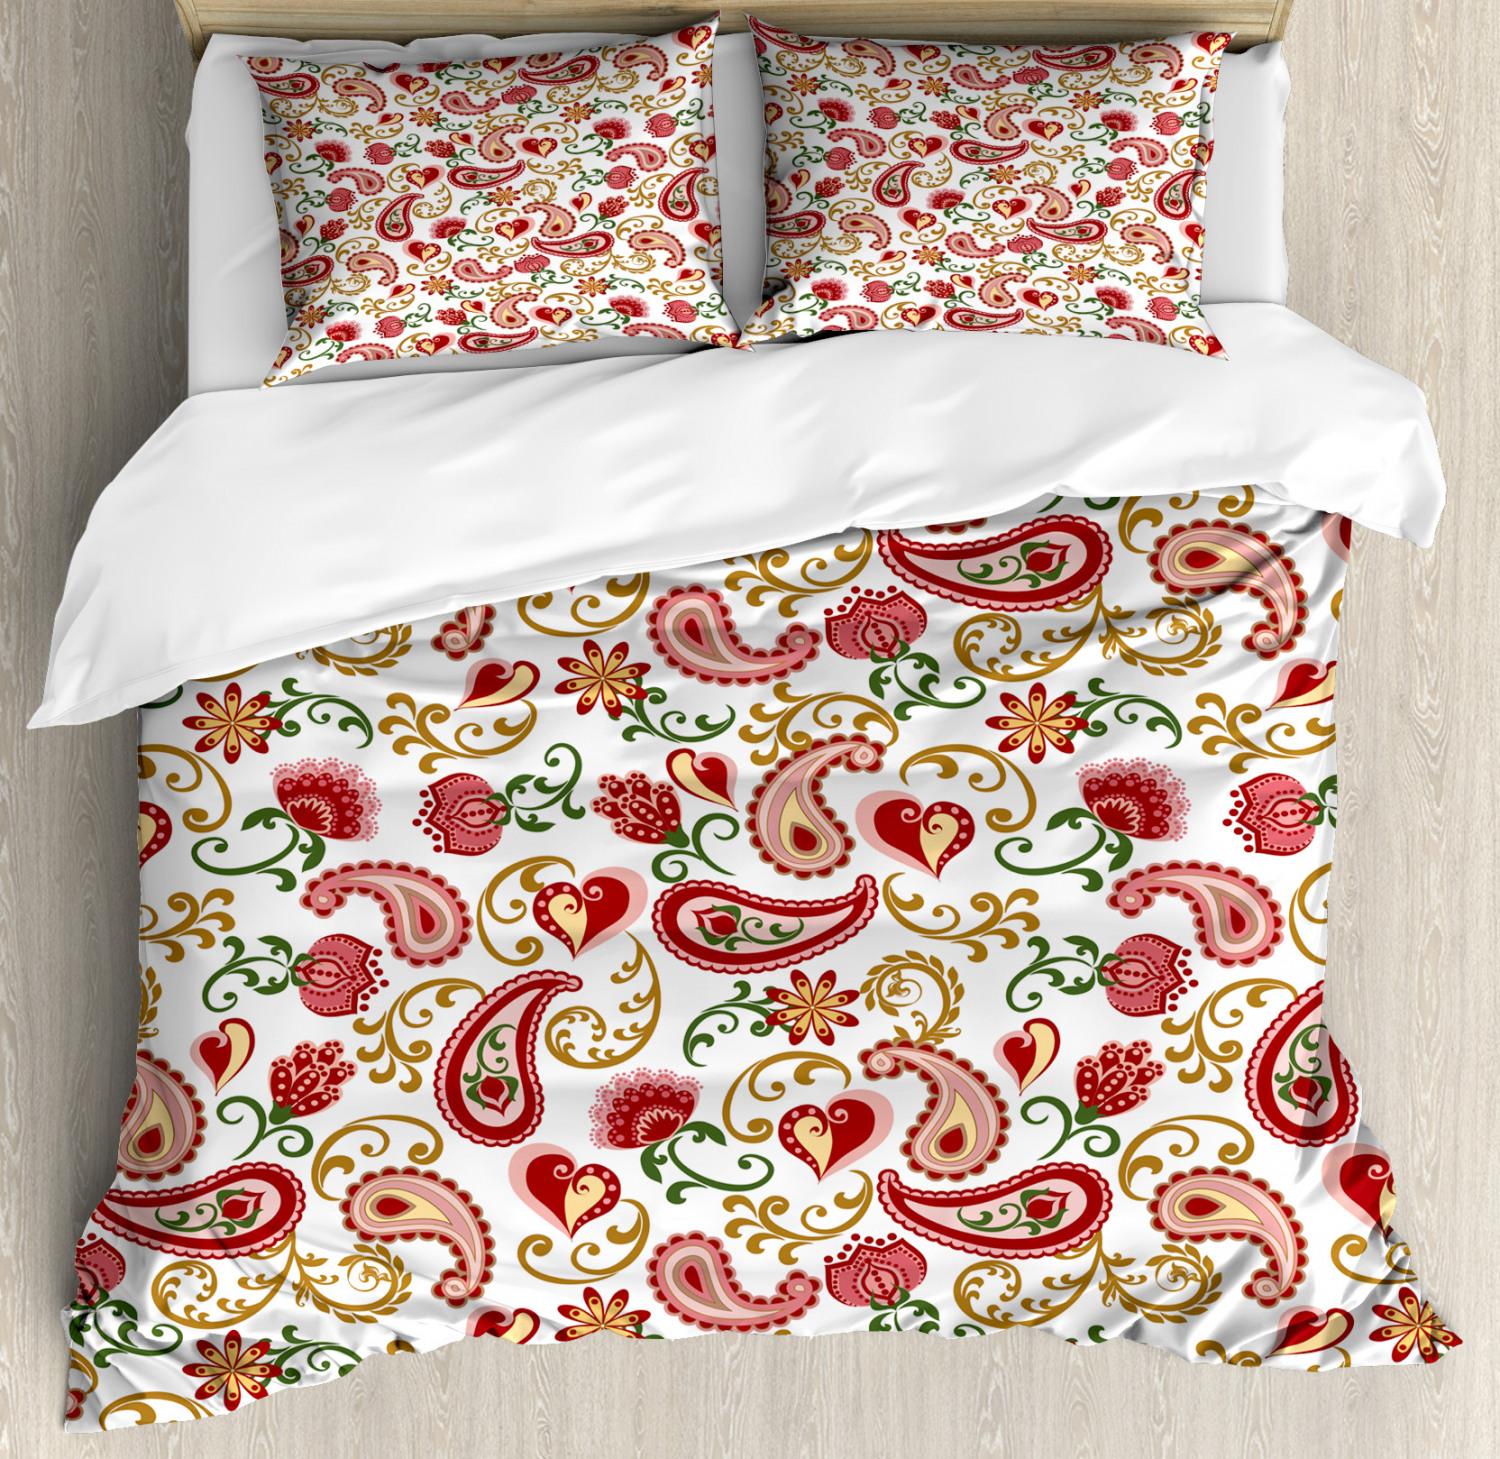 Paisley Duvet Cover Set With Pillow Shams Style Rose Motif Print